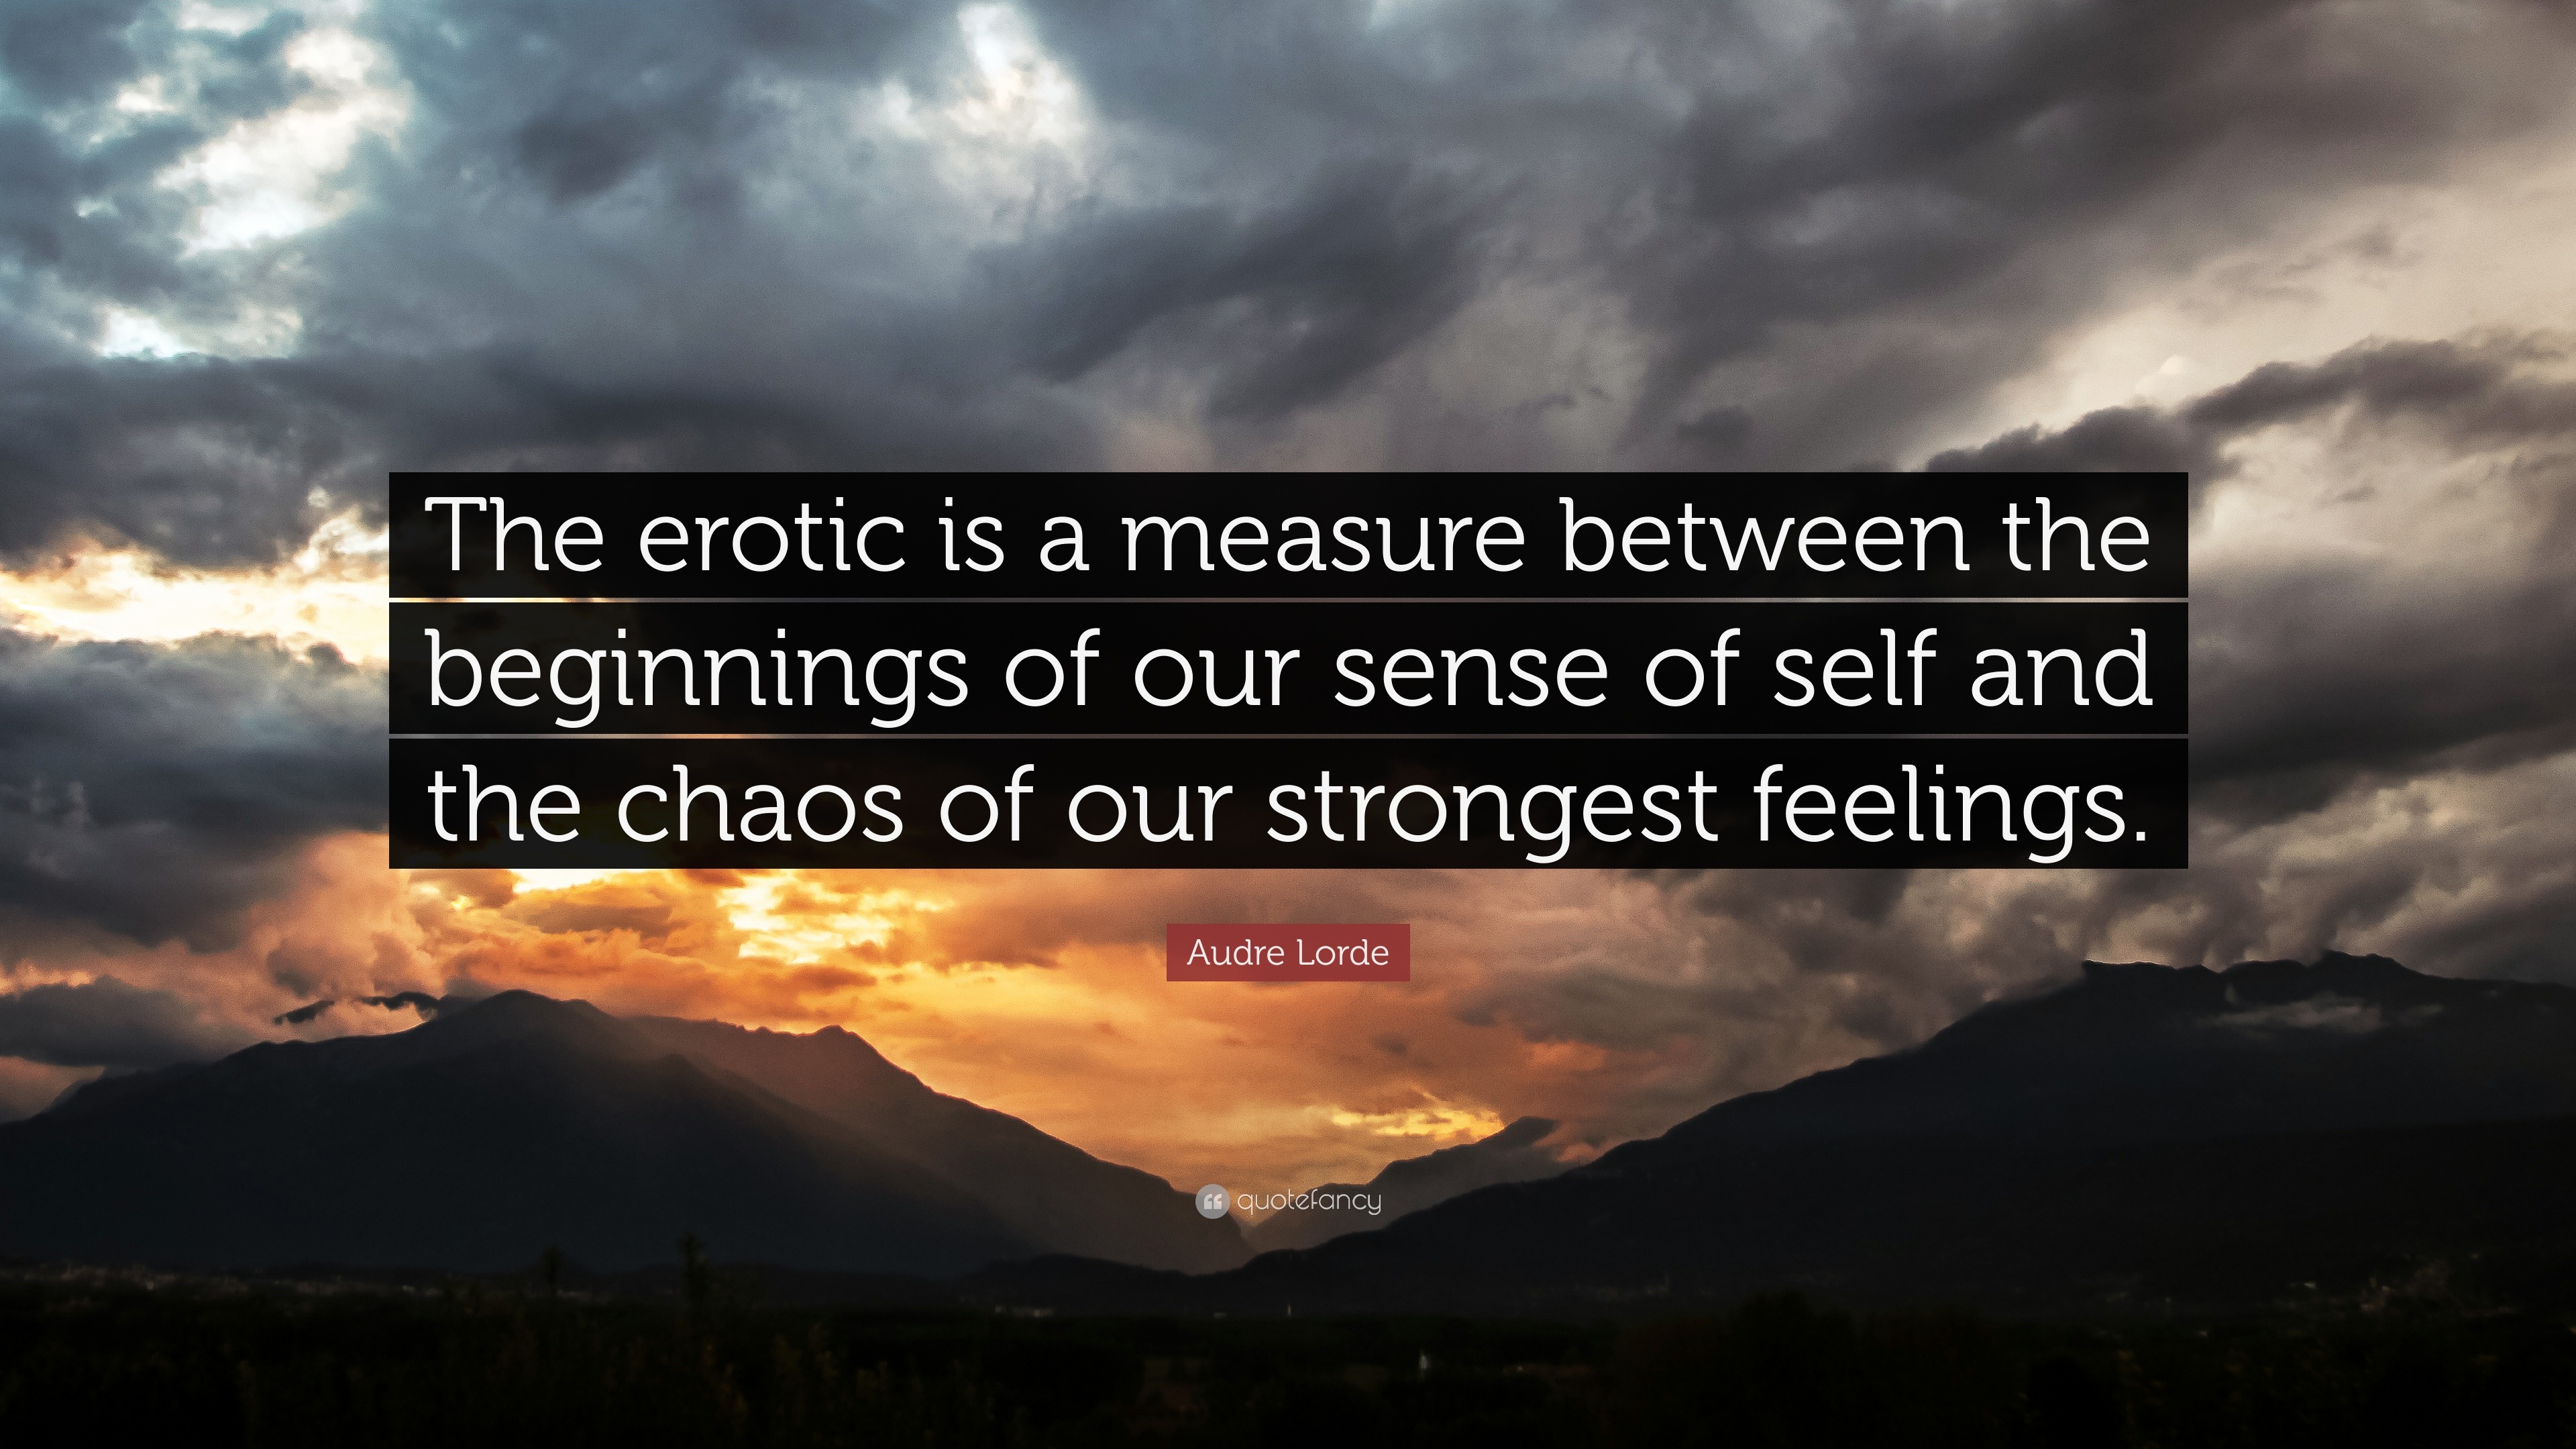 What are erotic feelings